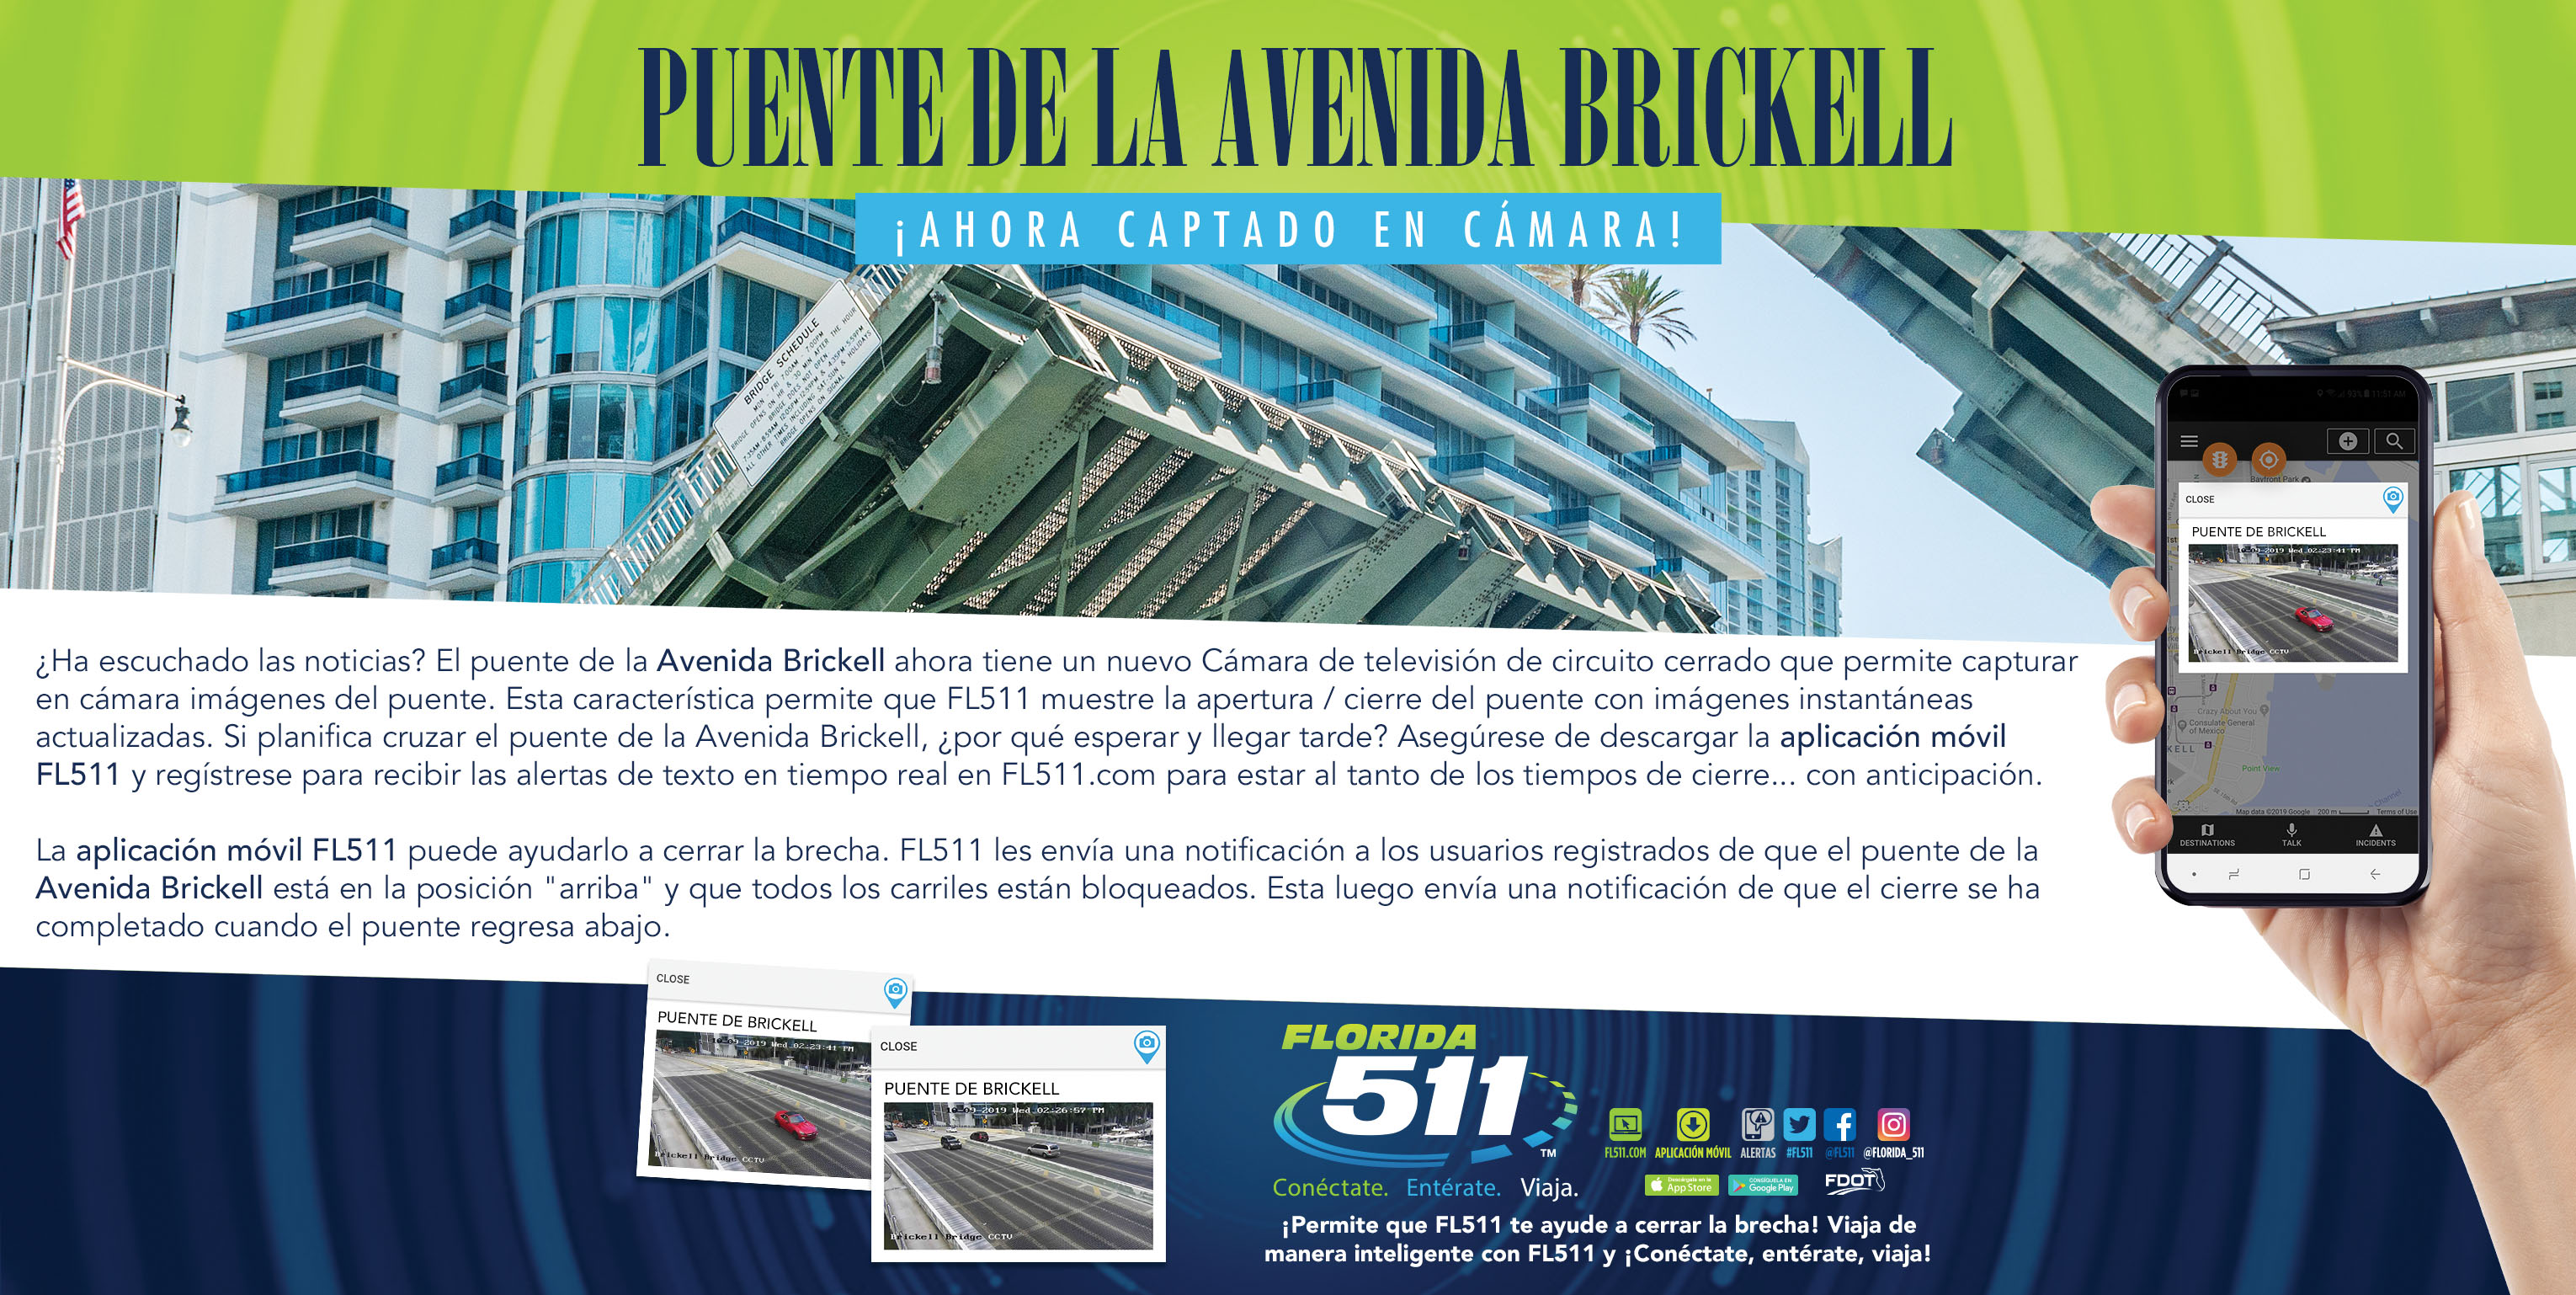 Brickell Avenue Bridge – Spanish ad